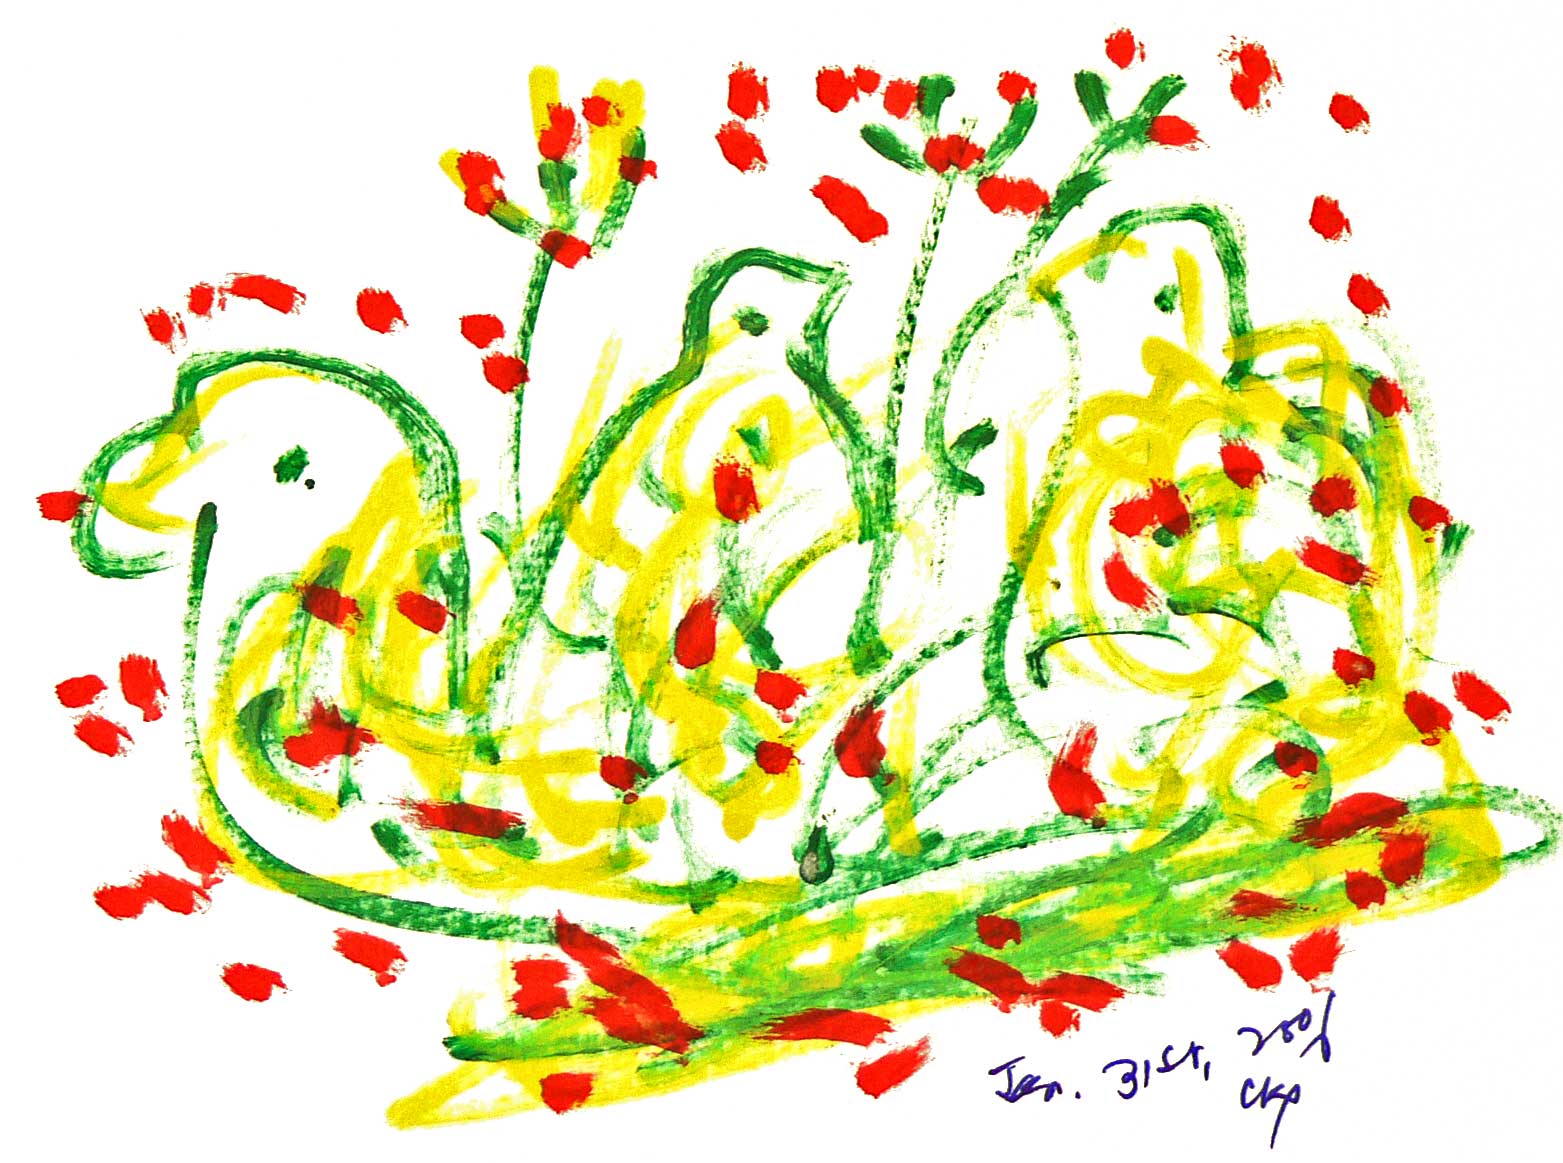 Bird-Drawing-by-Sri-Chinmoy-31-1-2006-12